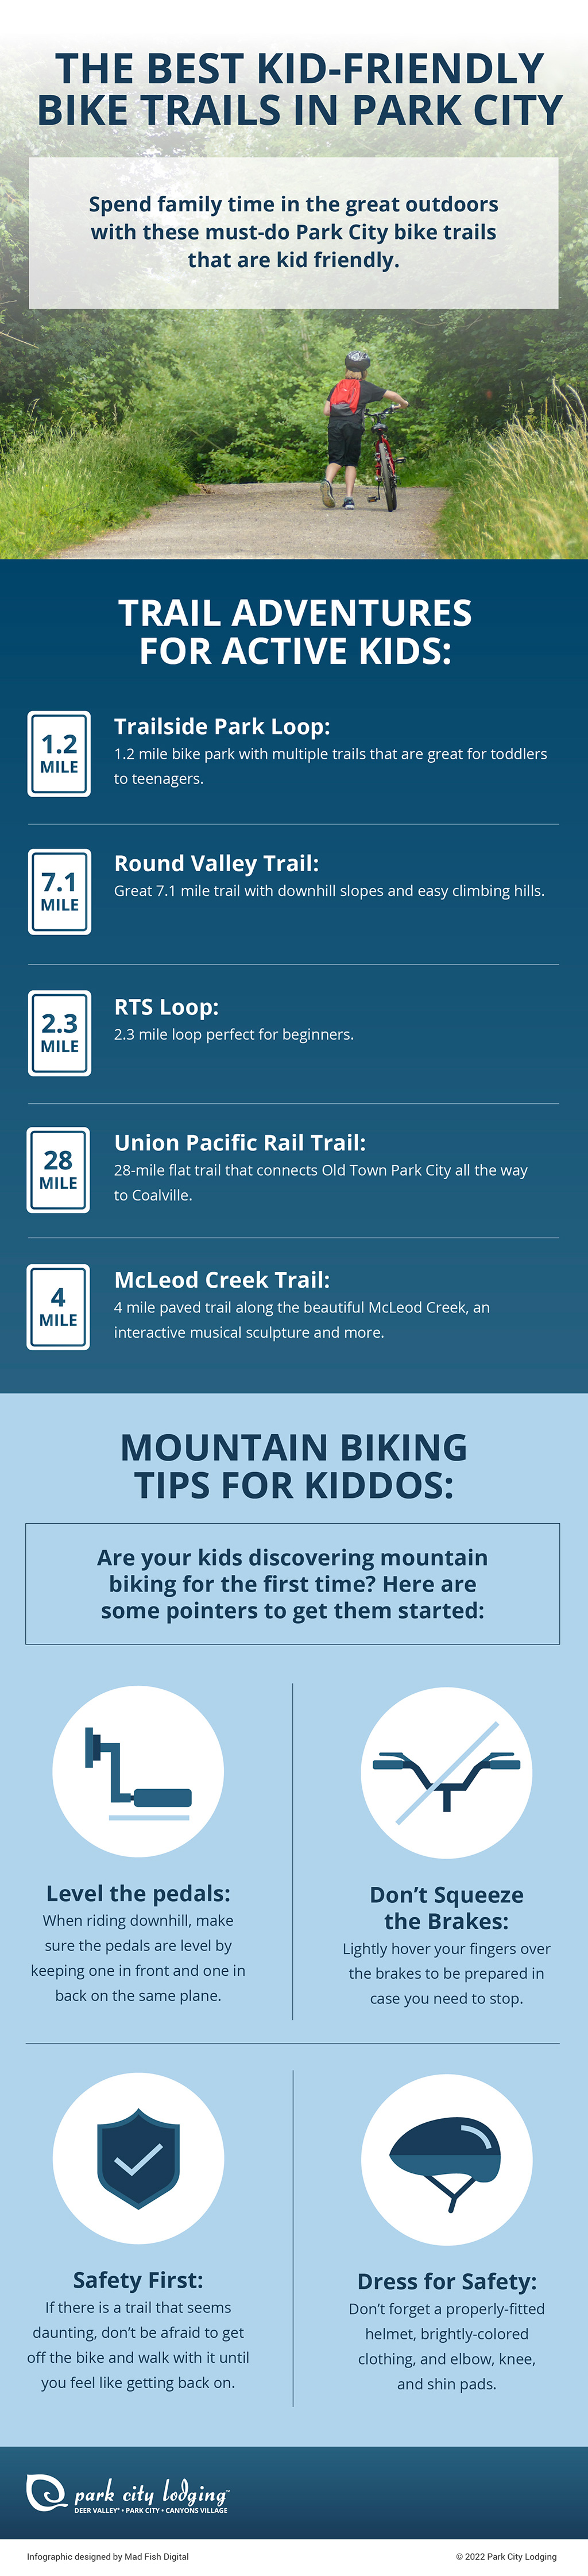 Park City kid-friendly bike trail infographic